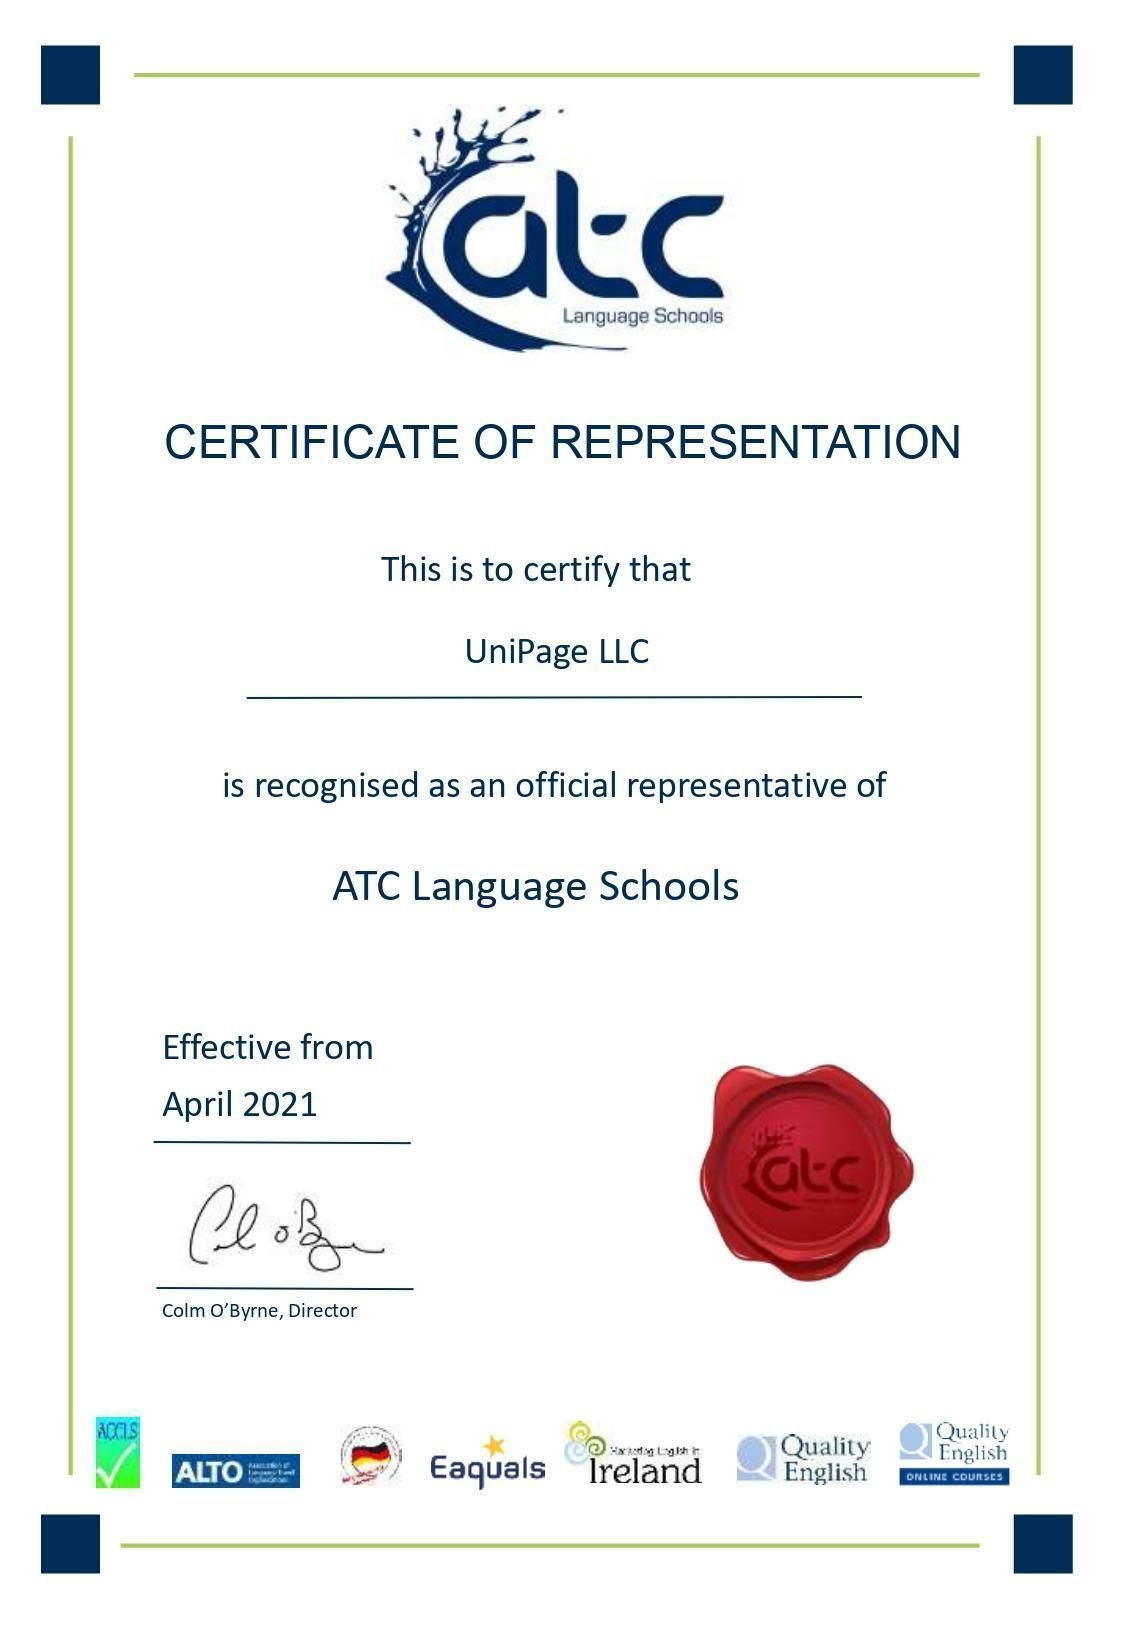 ATC LS Certificate of Representation